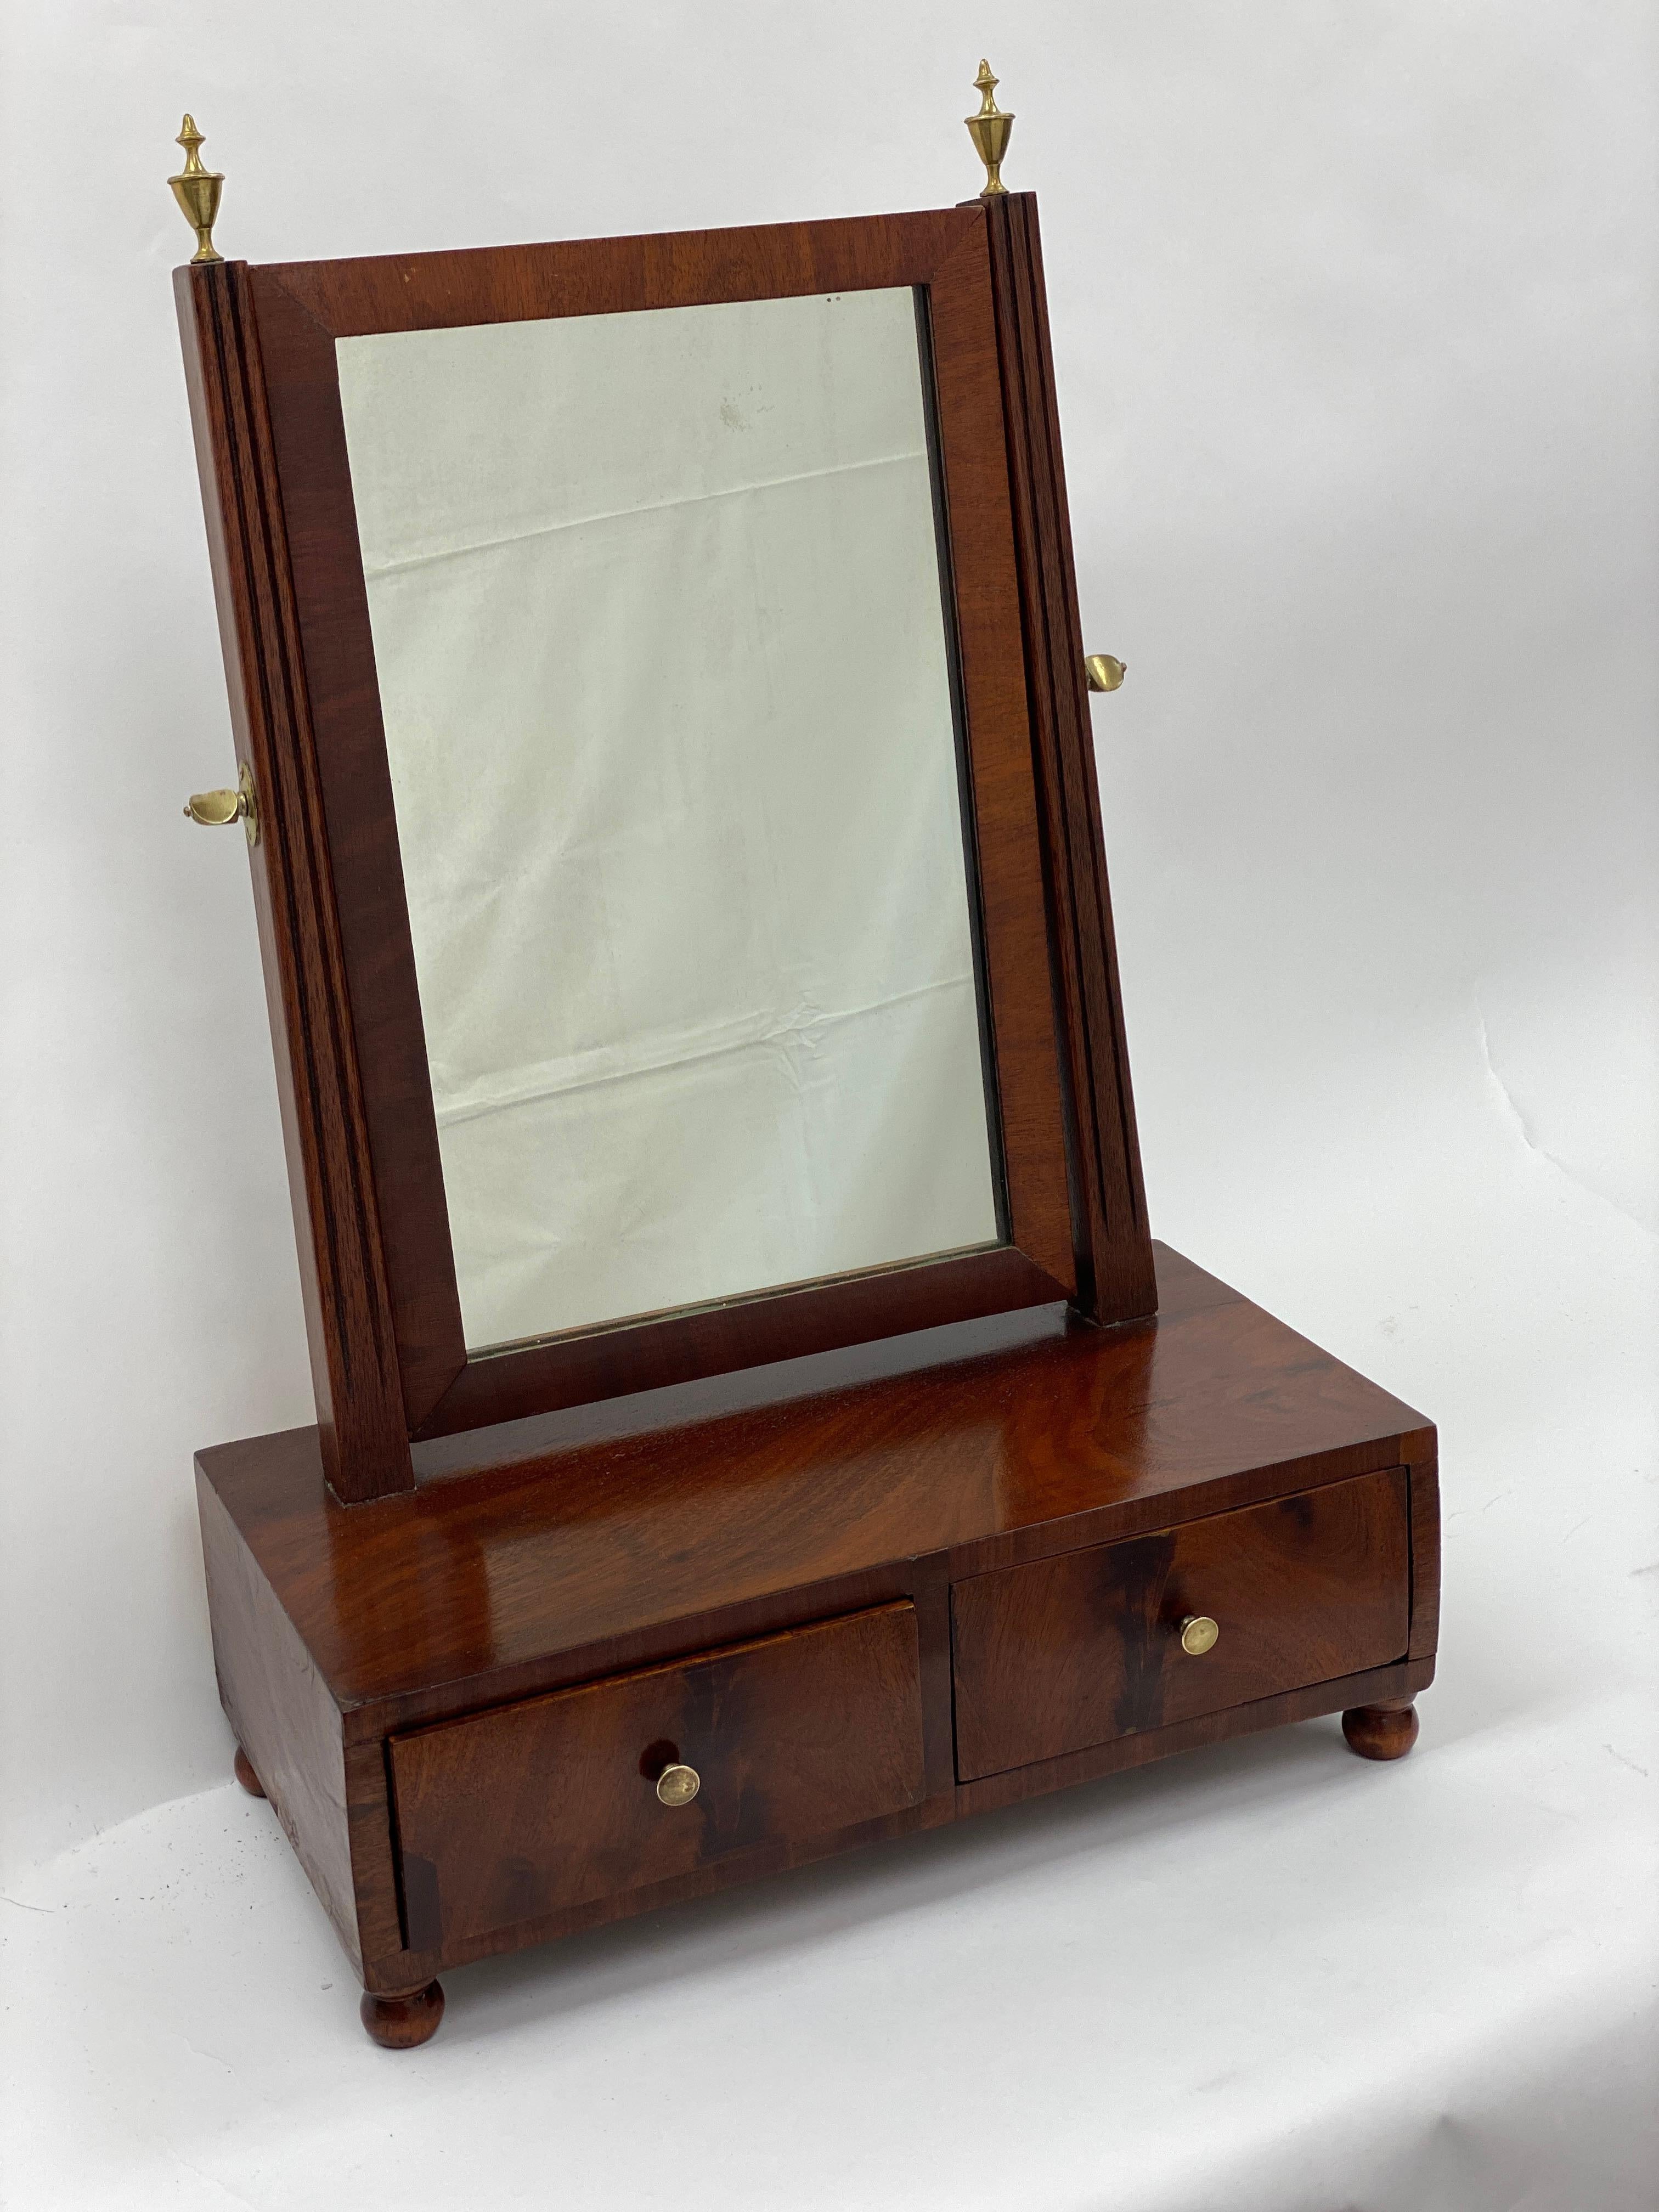 Early 19th century Mahogany shaving mirror, Circa 1810 
Two drawer box veneered in flamed Mahogany, Original brass hardware and original mirror. 
Simple & Elegant timeless design


Measures: 15